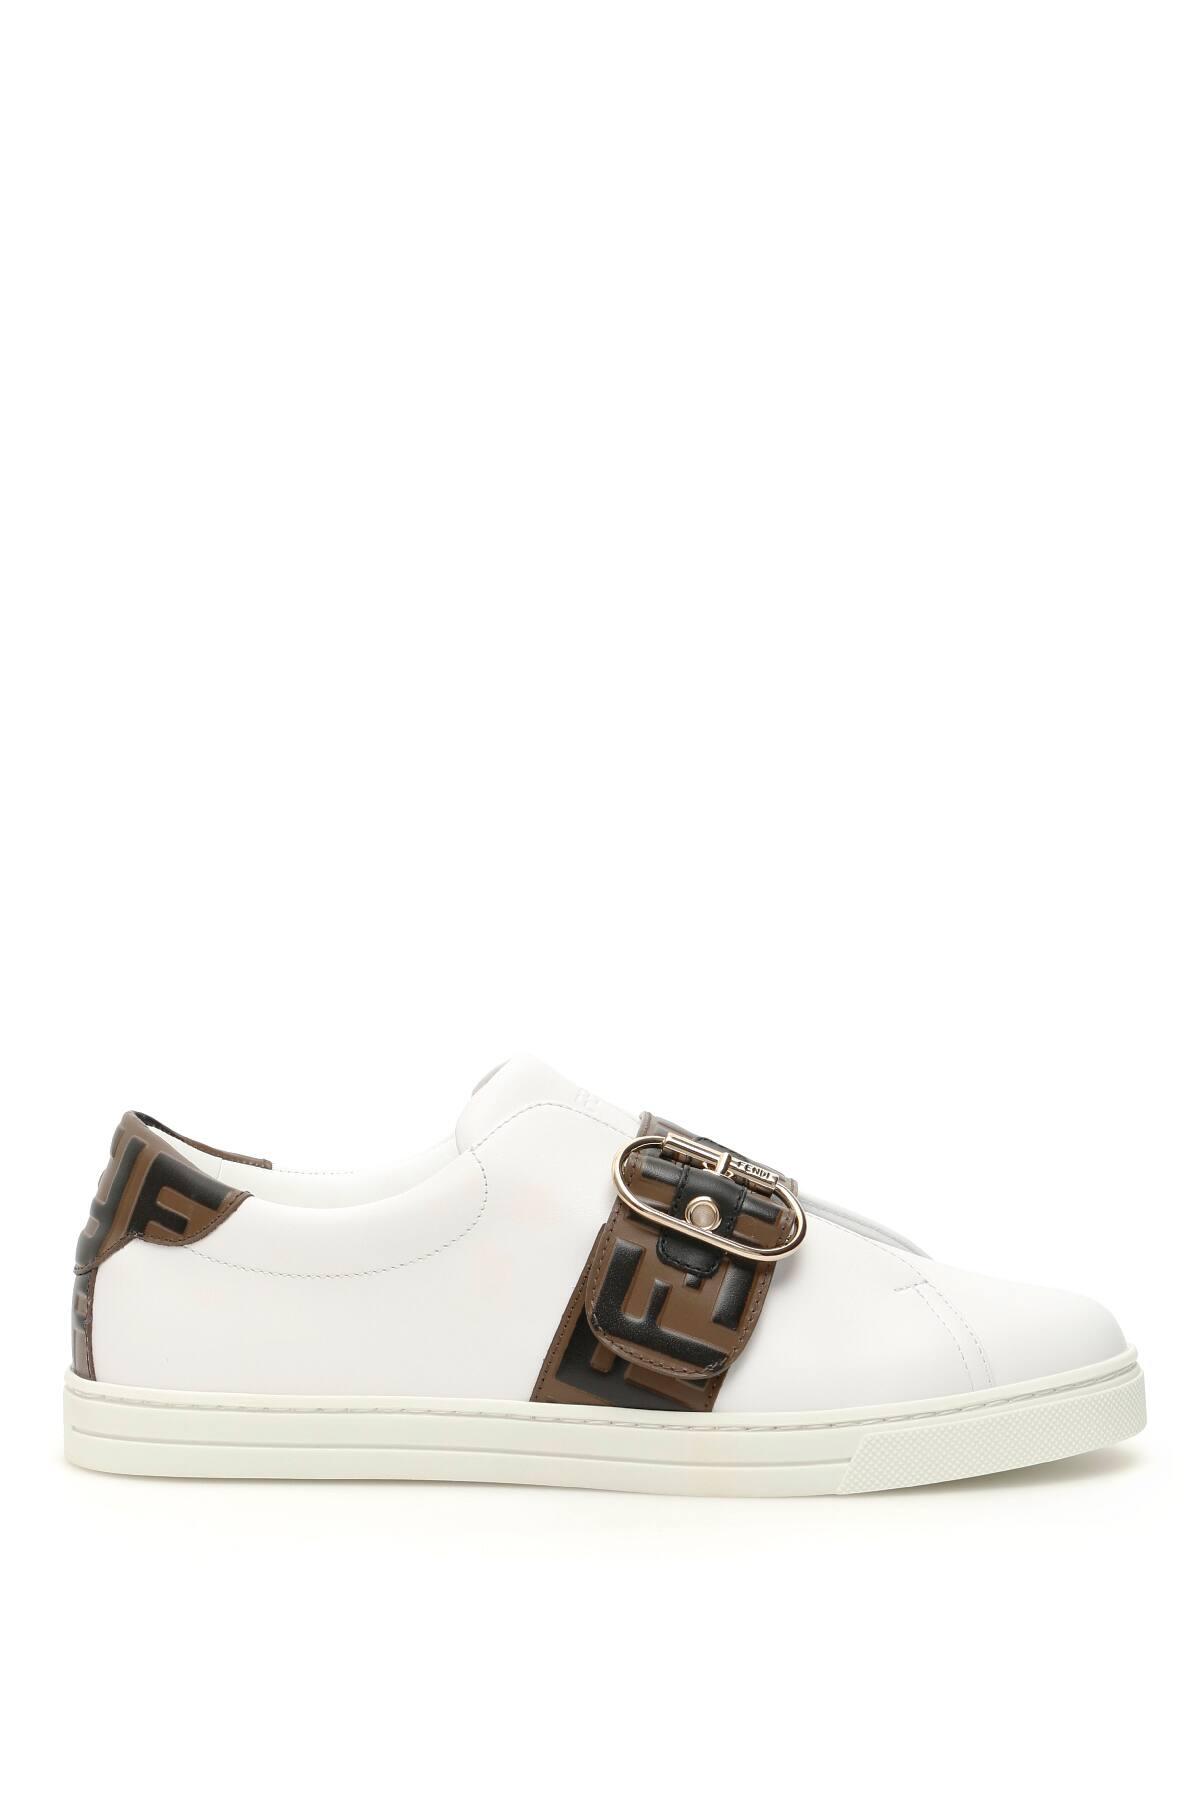 Fendi Rubber Ff Sneakers in White,Brown (White) - Lyst